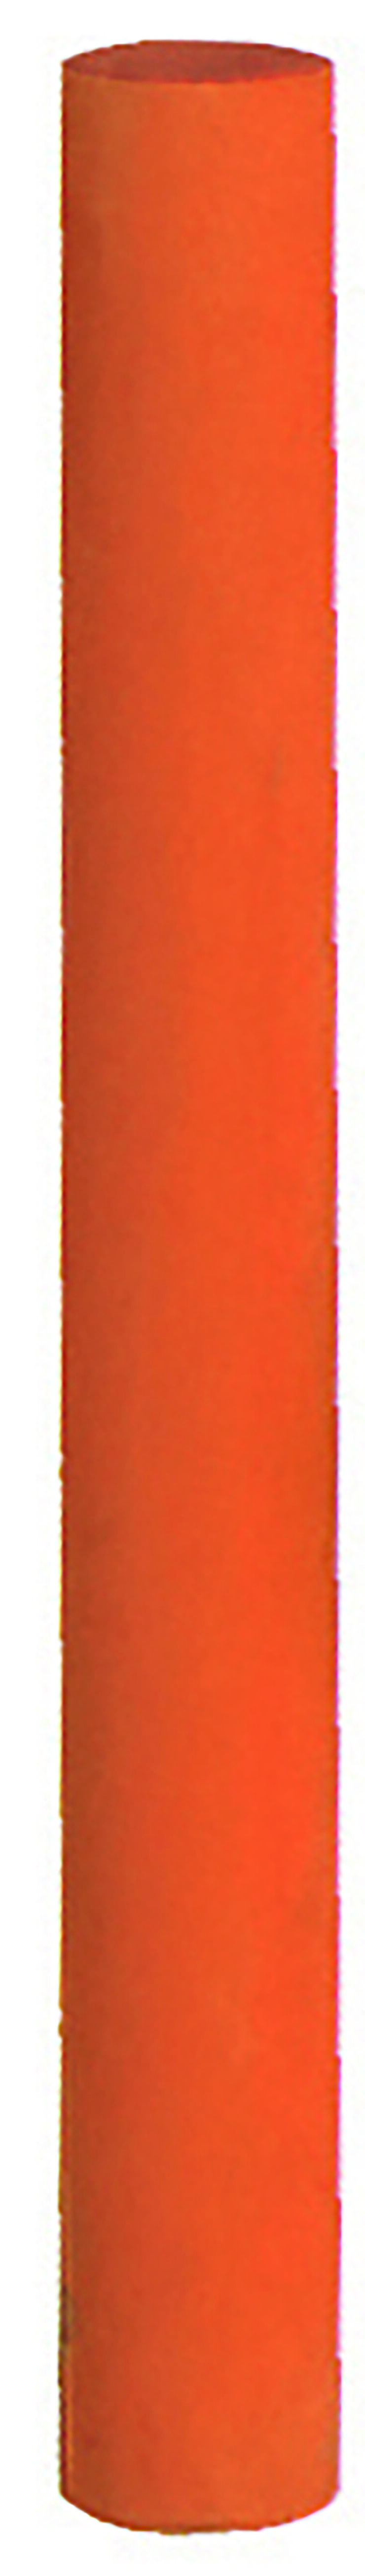 Tiza antipolvo Giotto Robercolor colores 100u